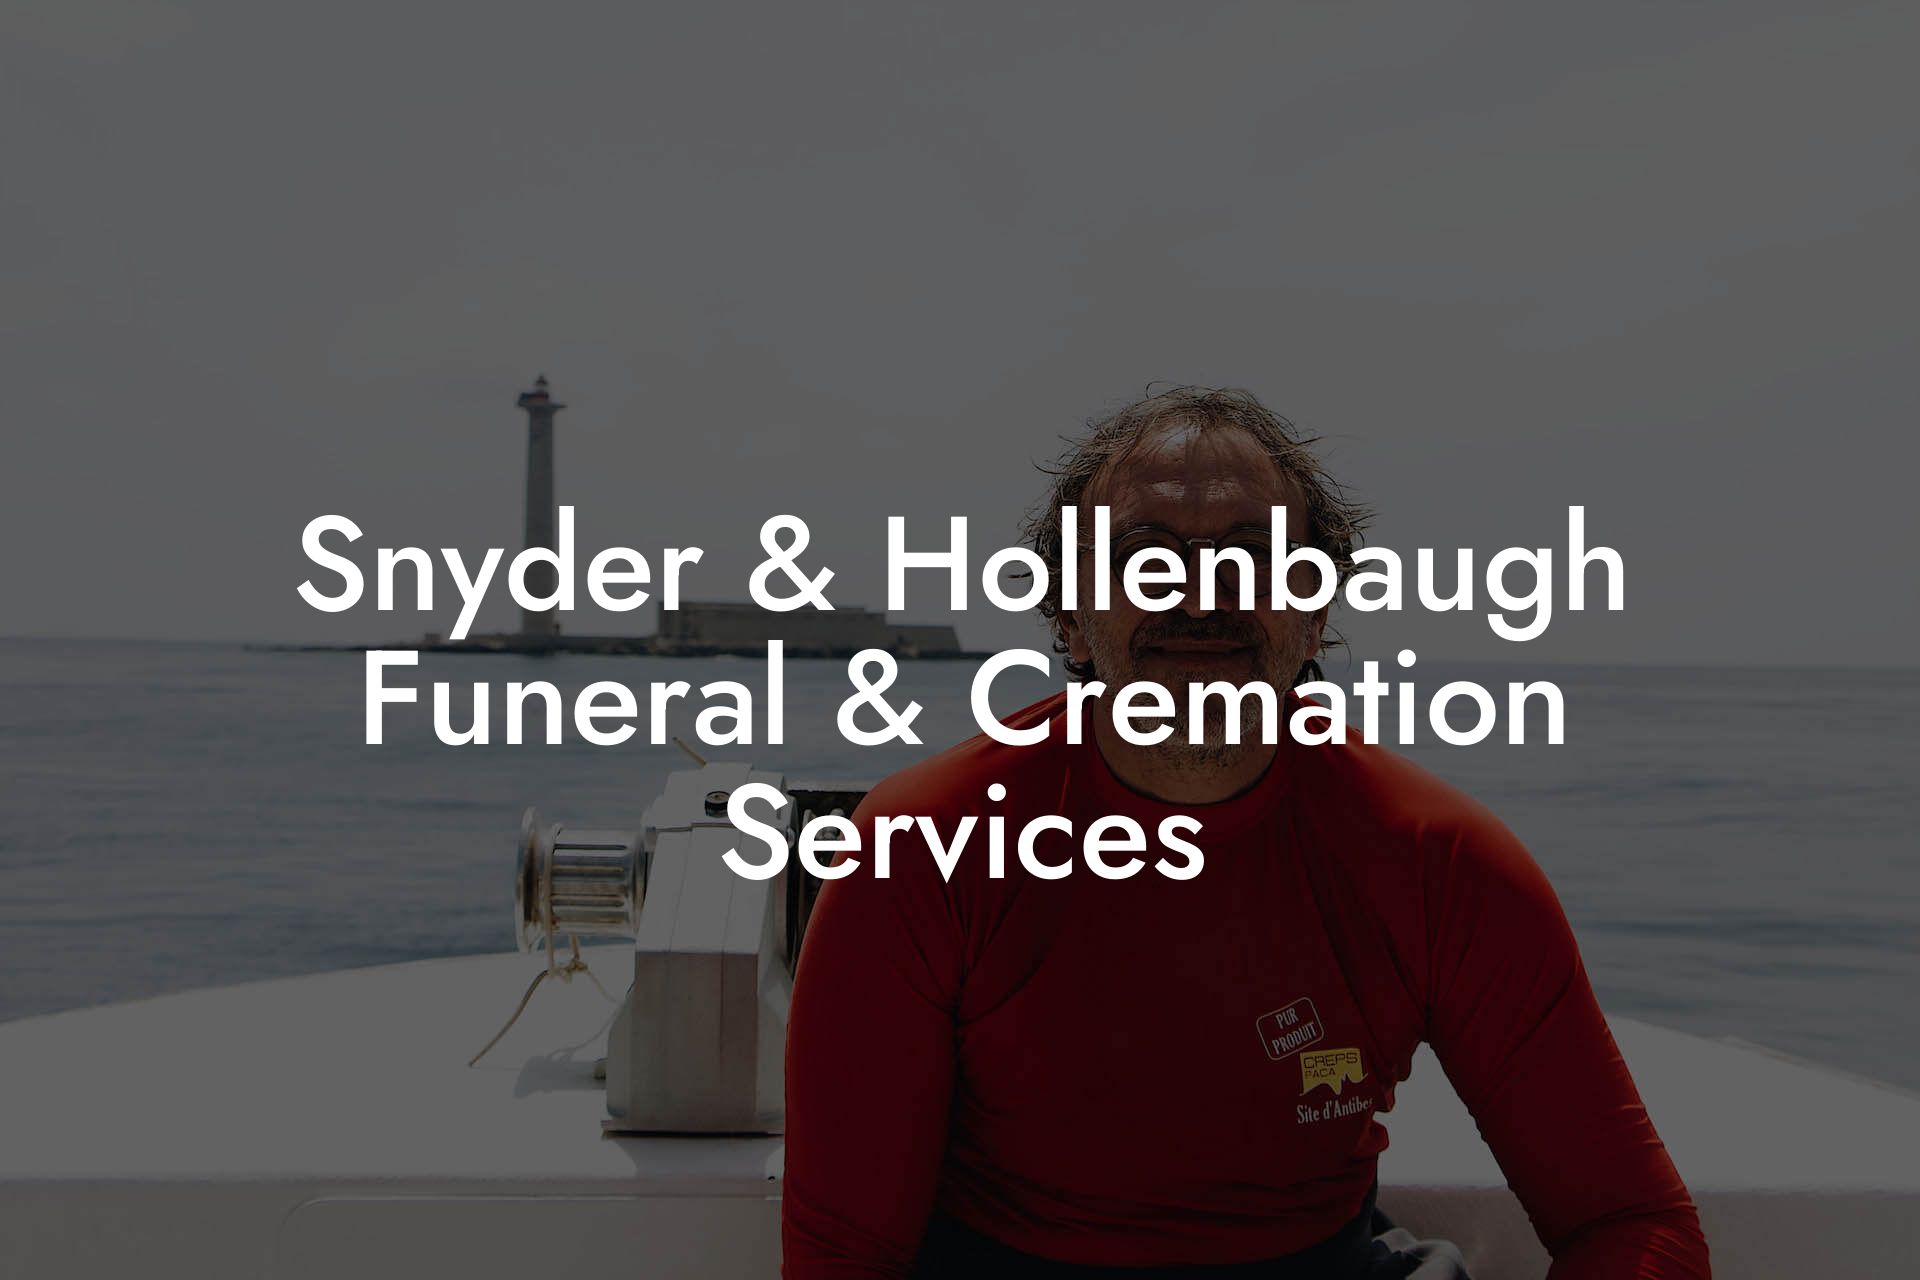 Snyder & Hollenbaugh Funeral & Cremation Services